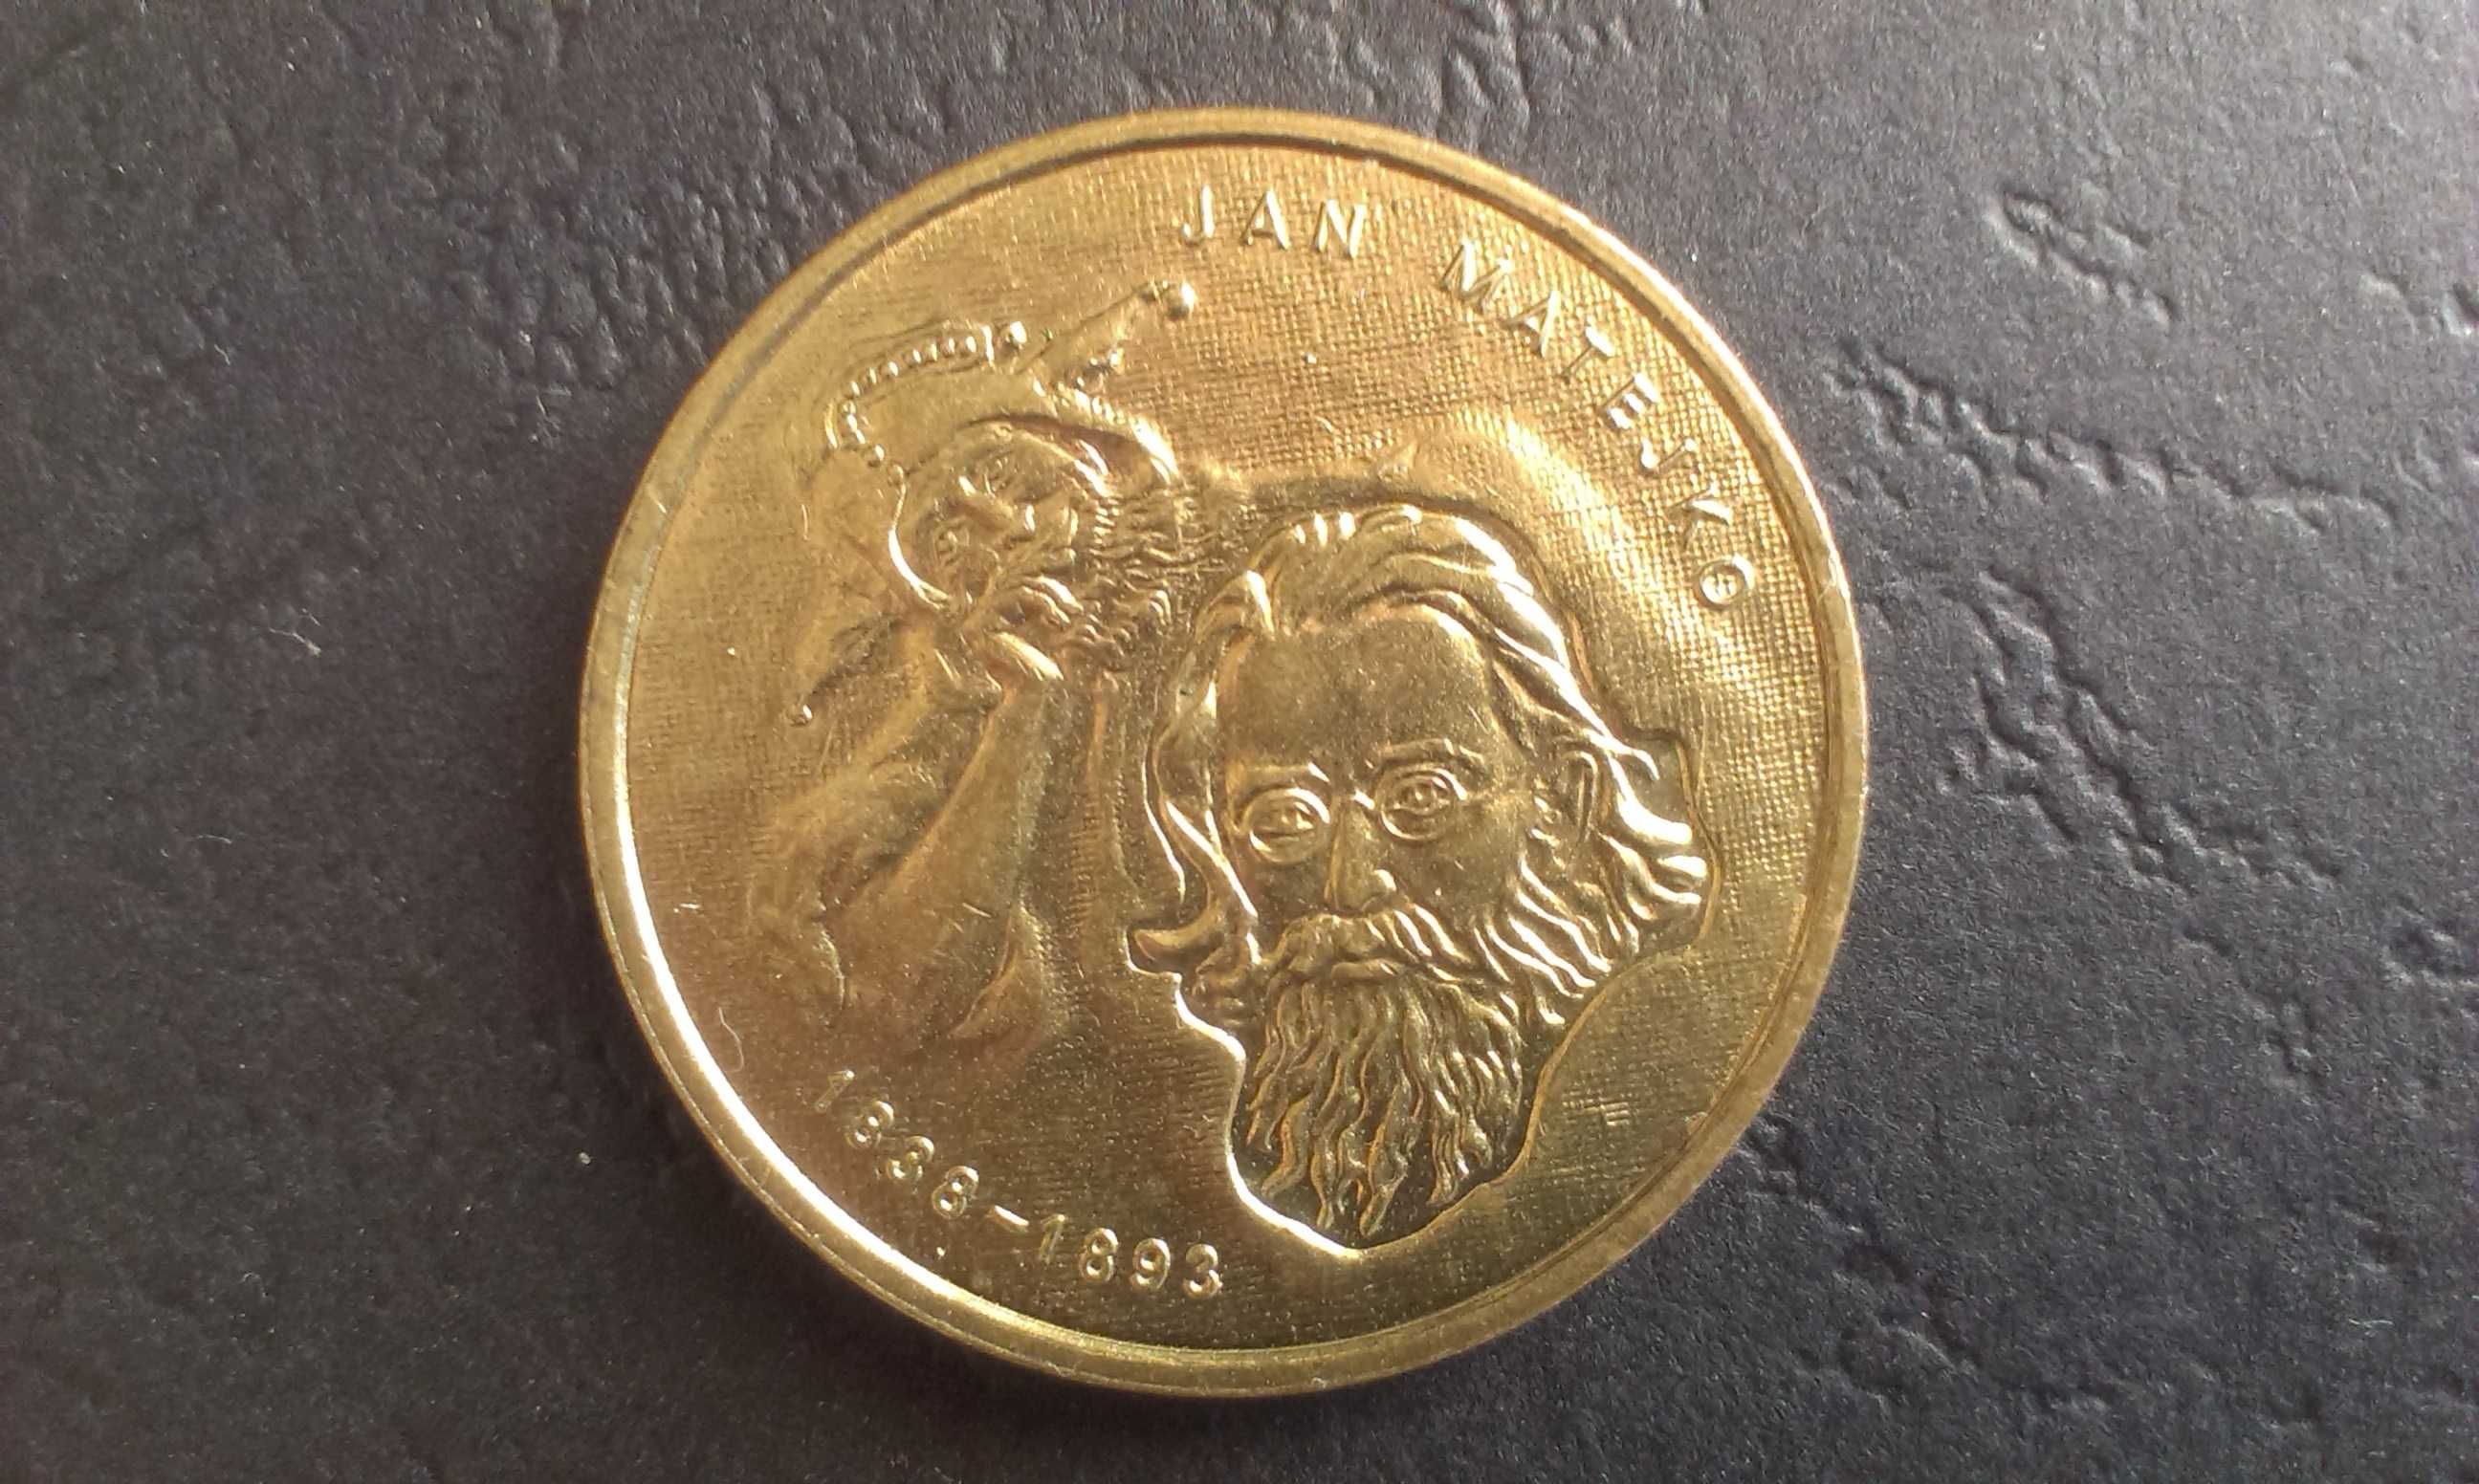 Moneta 2 złote 2002 rok Jan Matejko.